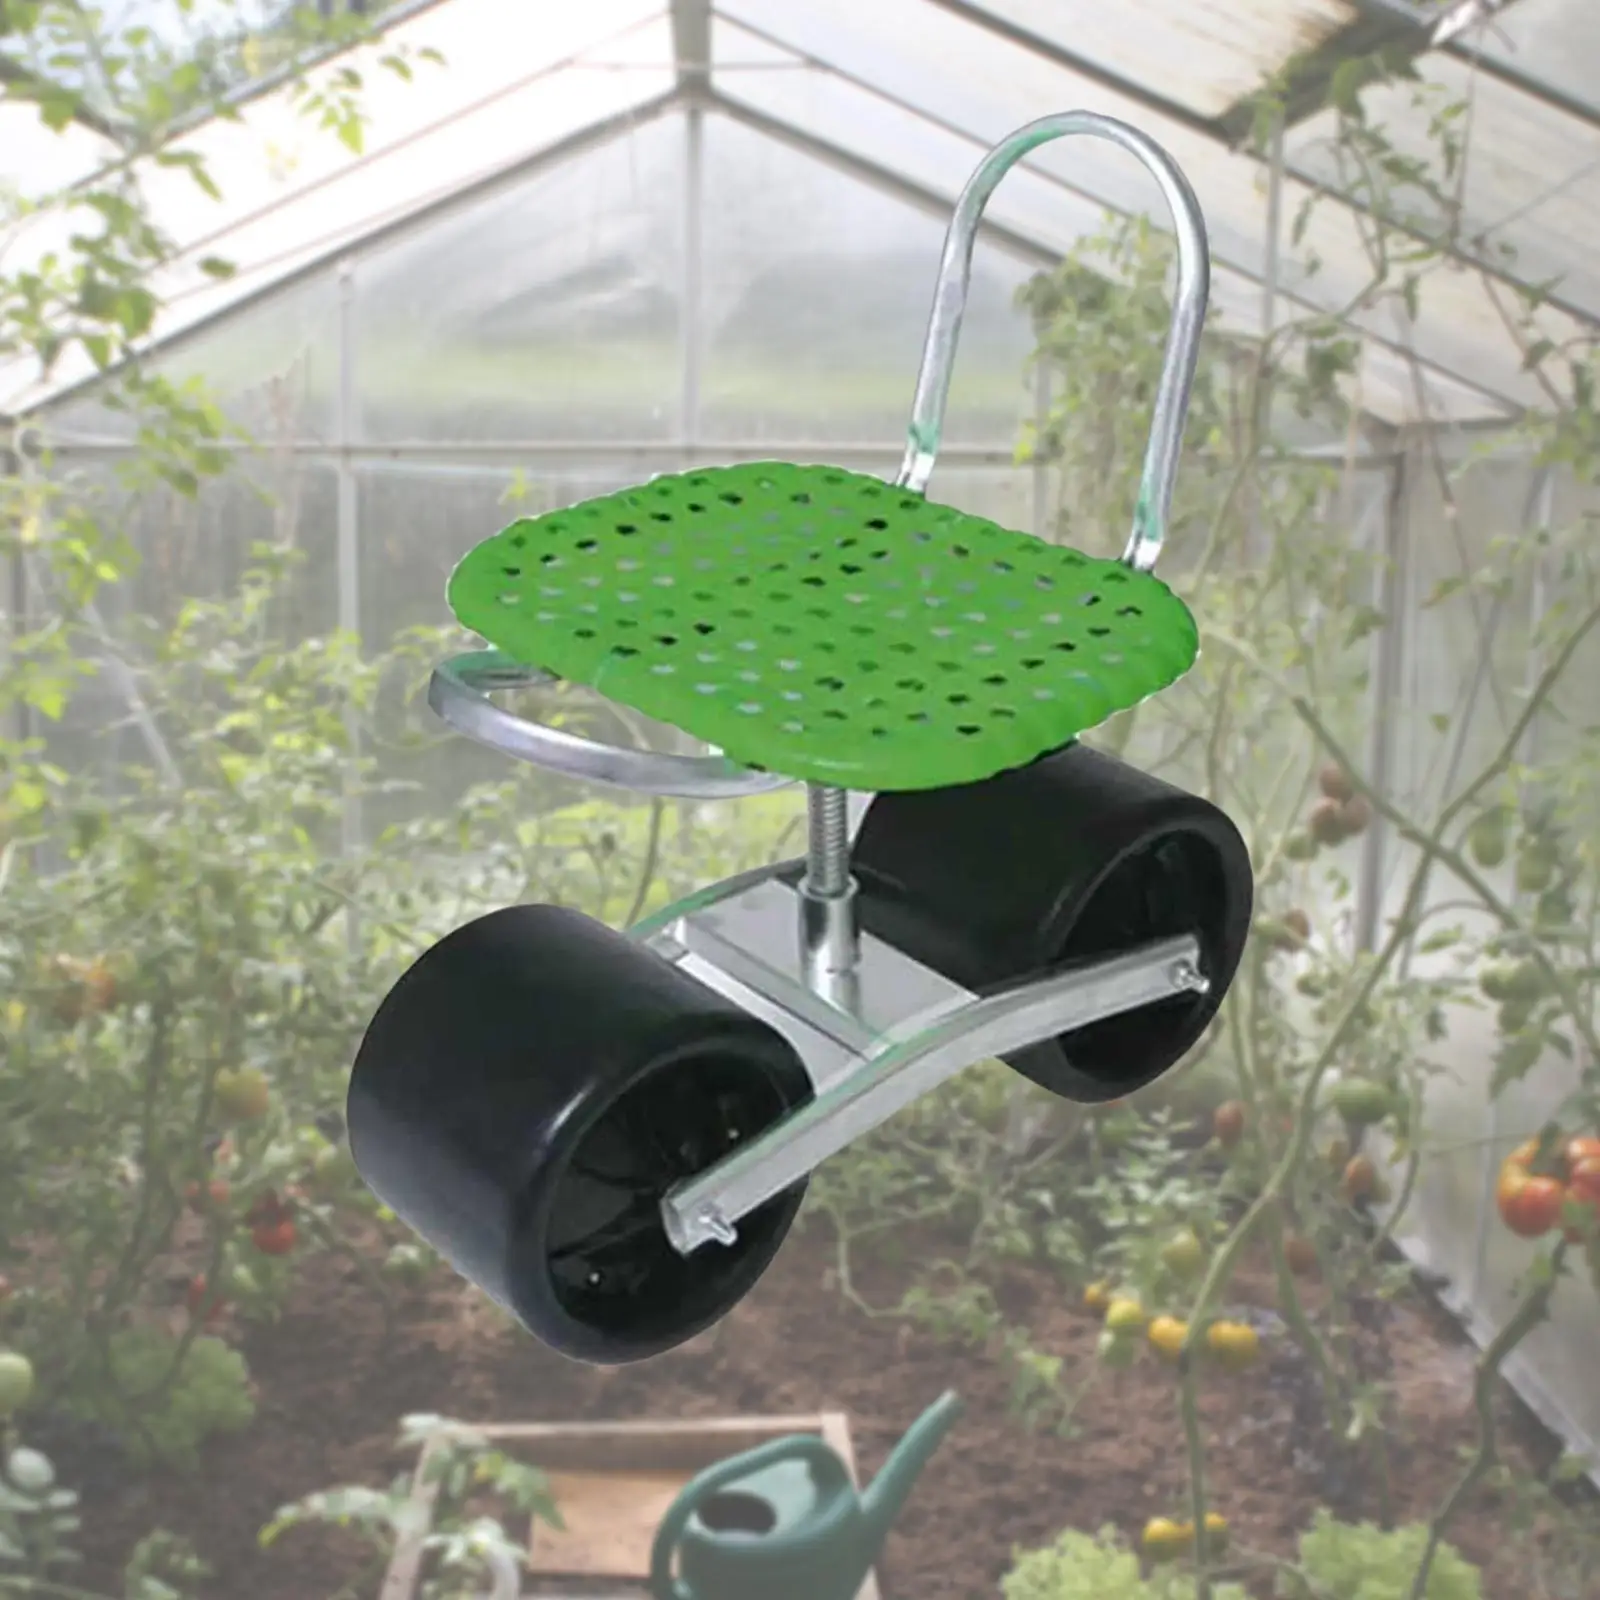 Garden Stool Height Adjustable Garden Trolley Rolling Seat for Lawns Weeding